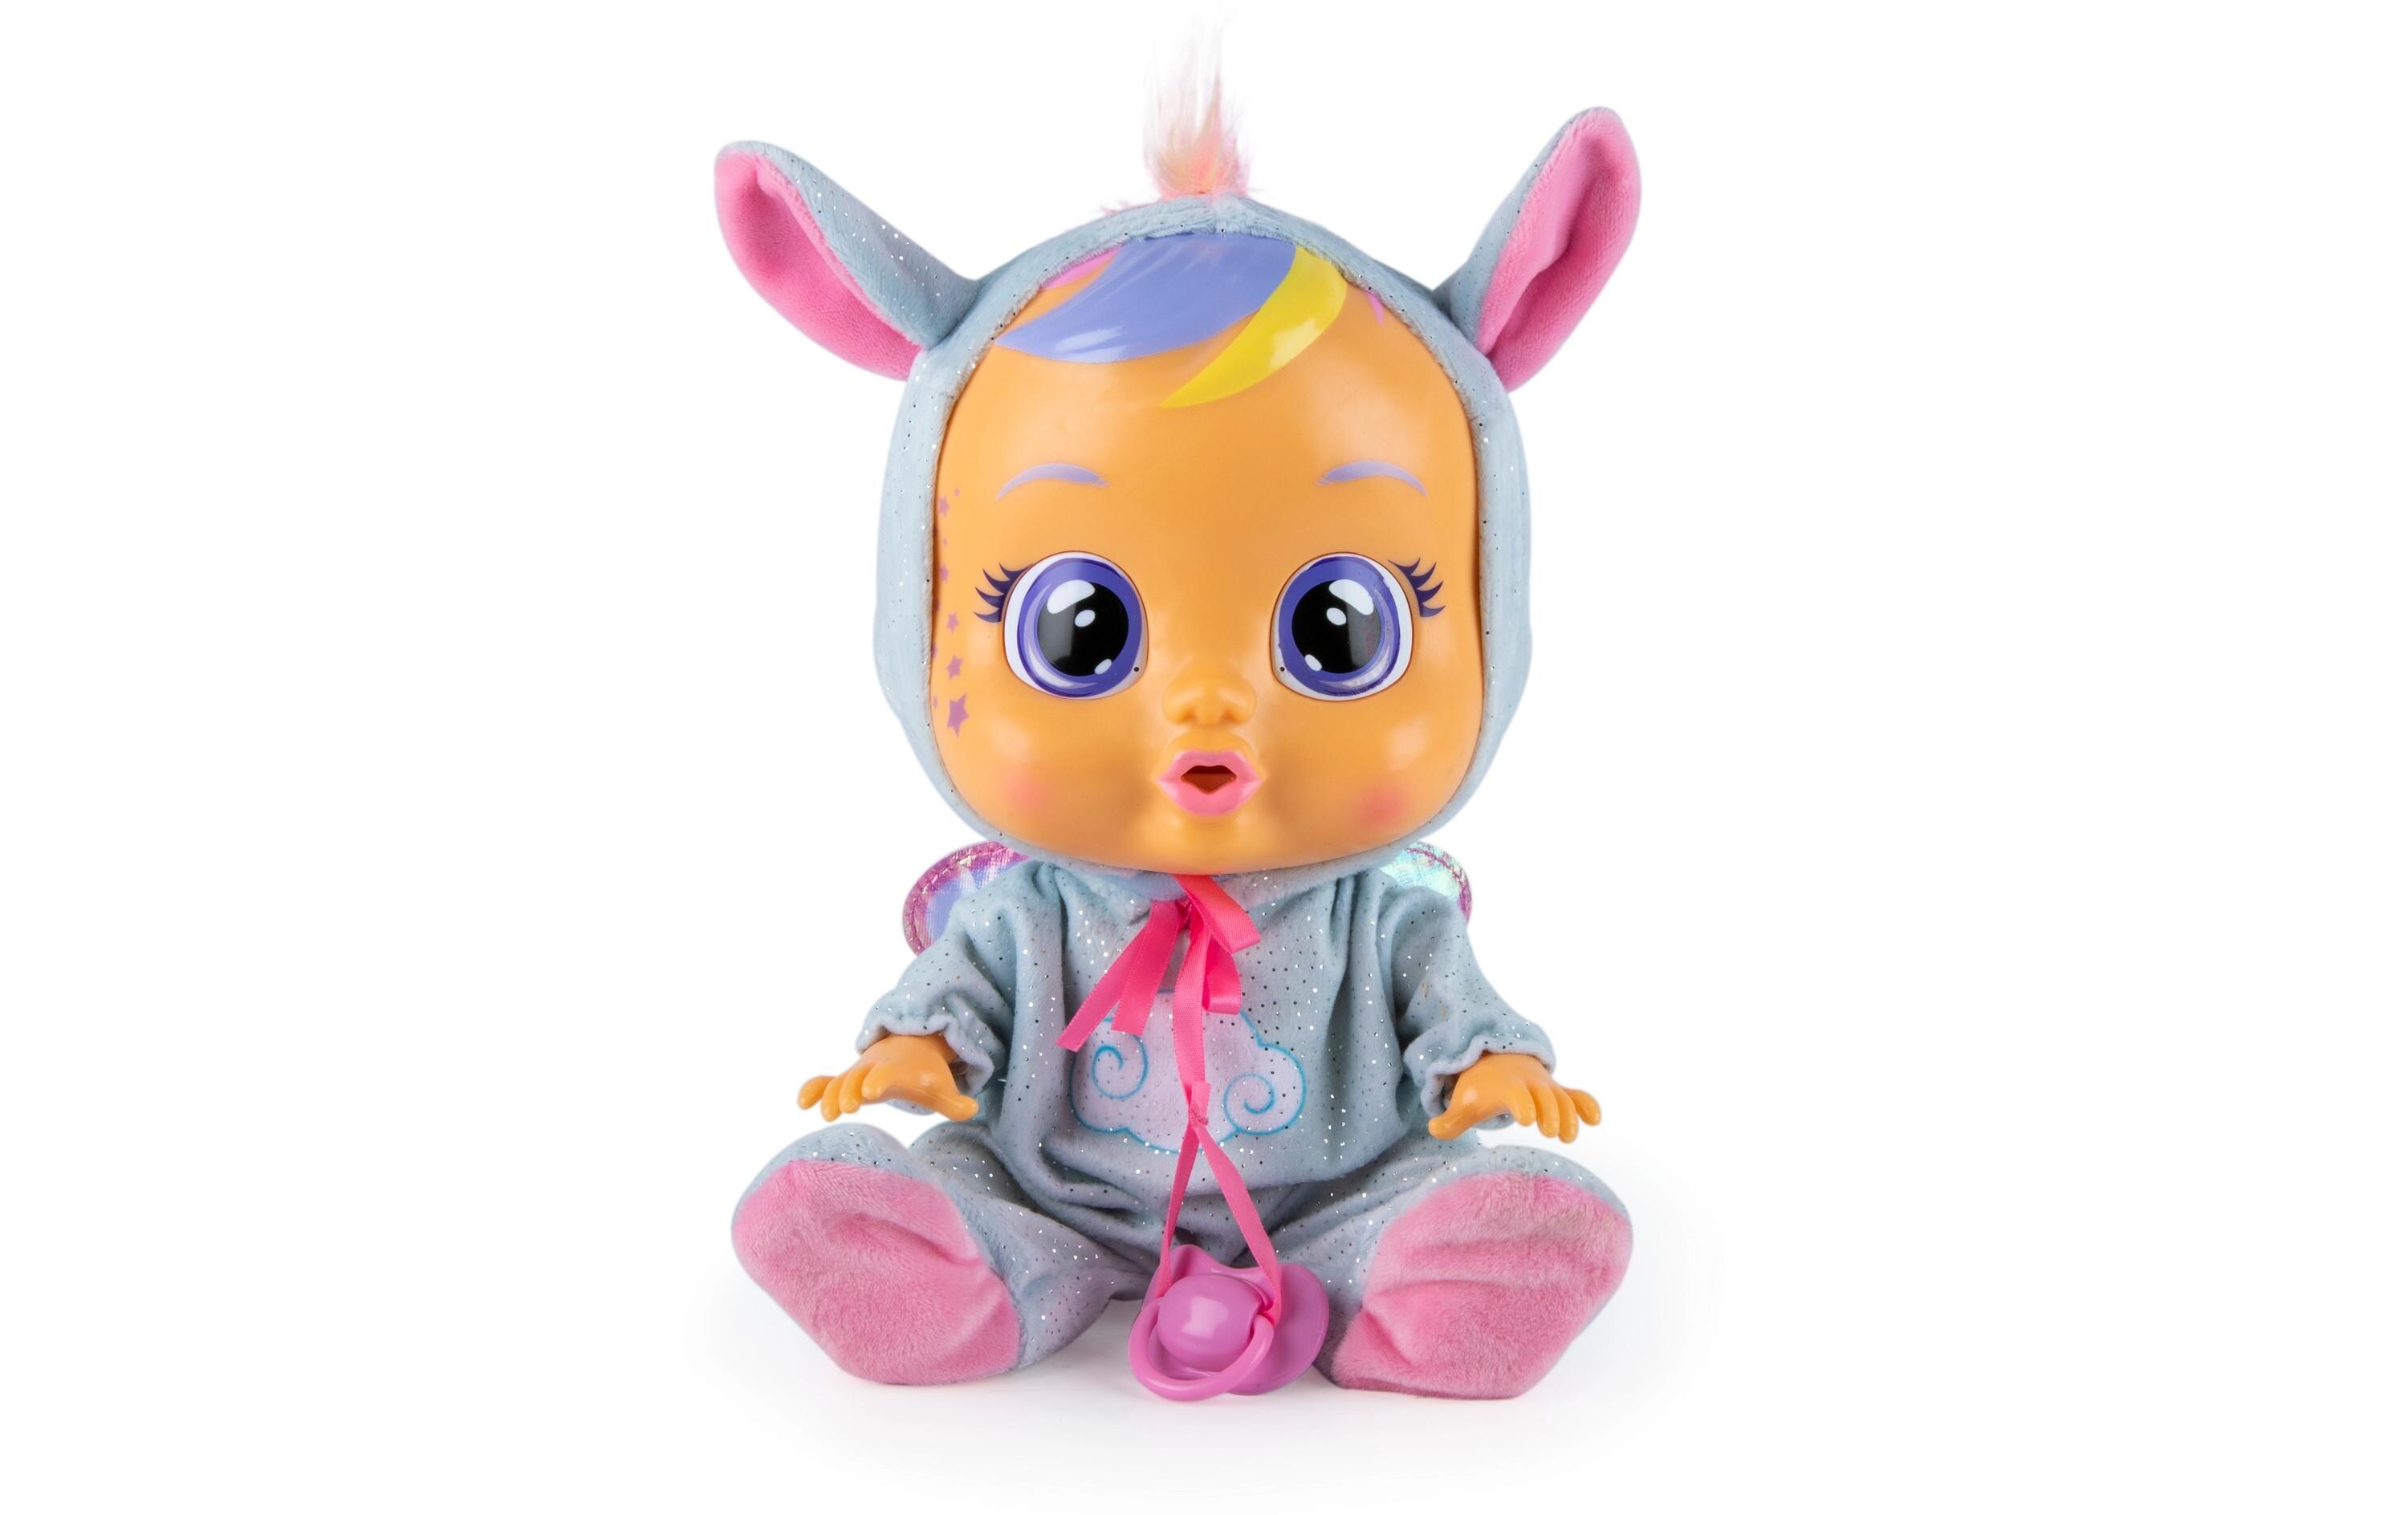 IMC Toys Puppe Cry Babies – Fantasy Jenna